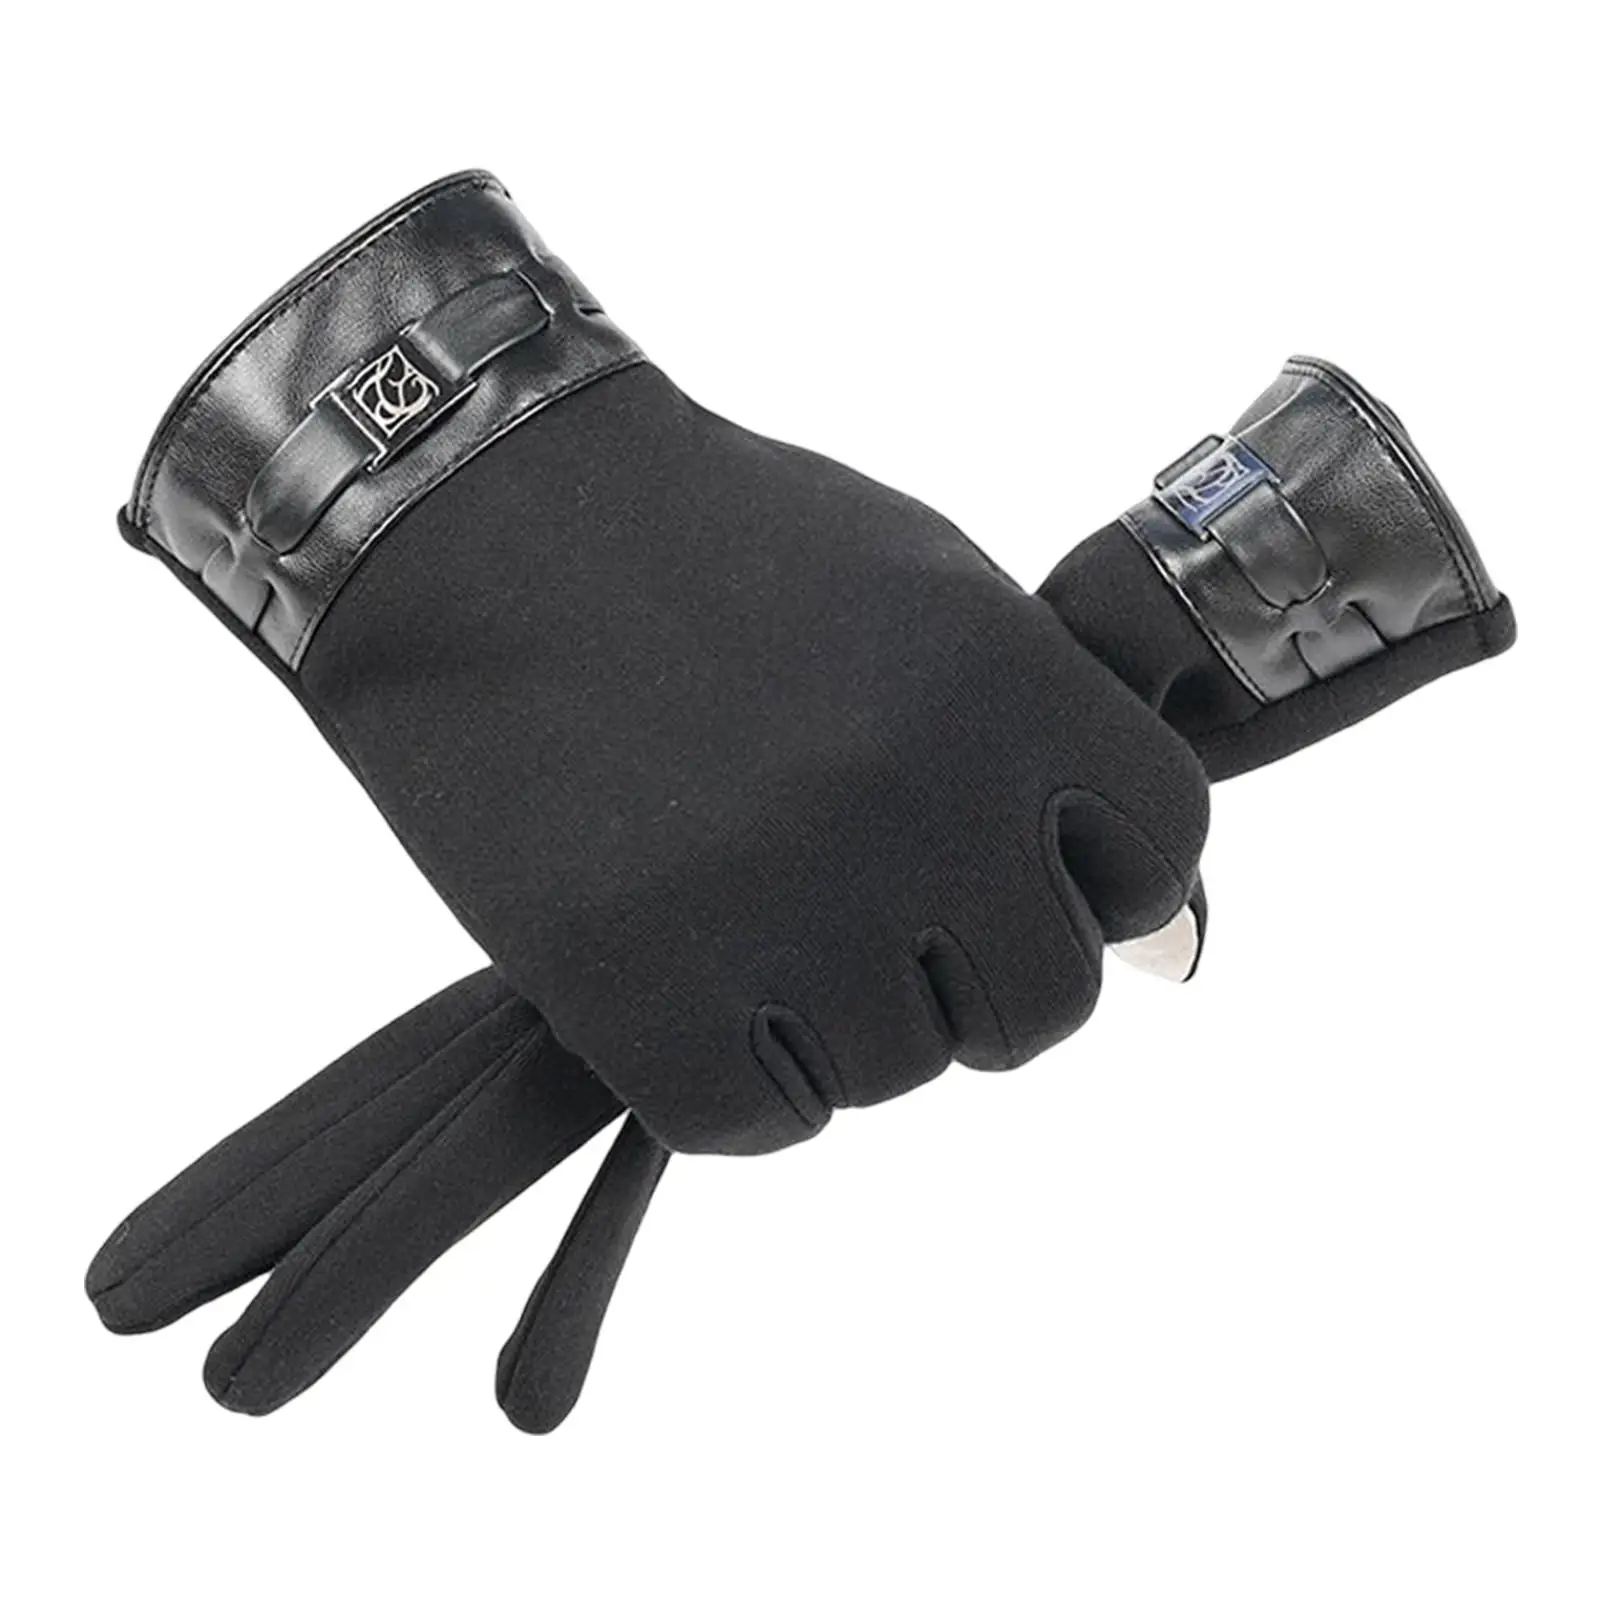 Lightweight Winter Gloves Comfortable Work Gloves Warm Gloves Non Slip Gloves for Hiking Camping Riding Driving Biking